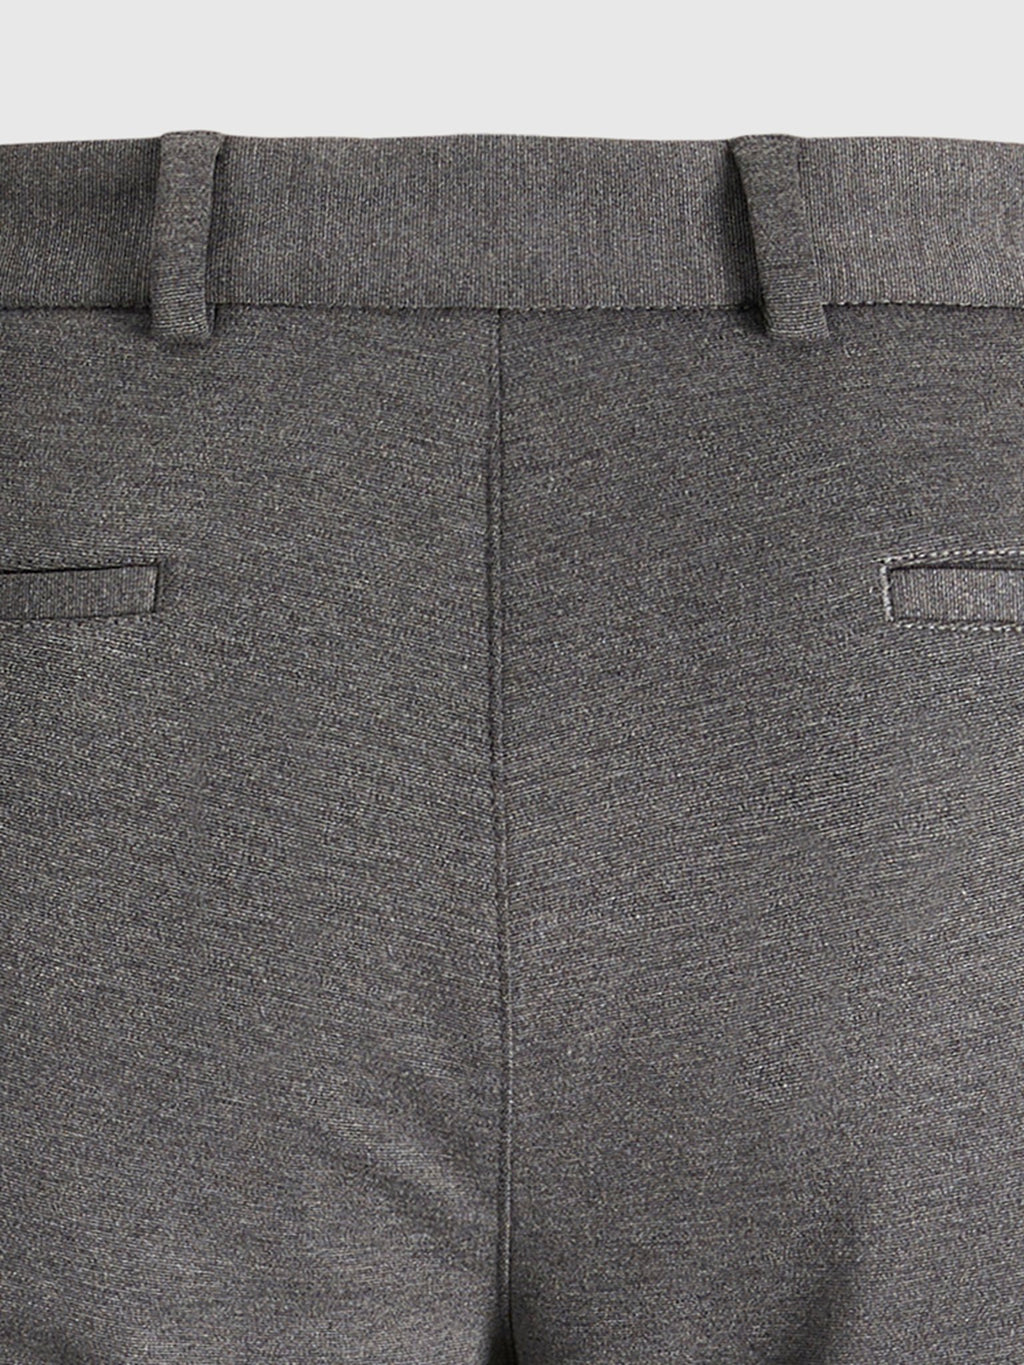 Originalne hlače za performanse (redovite) - tamno sive